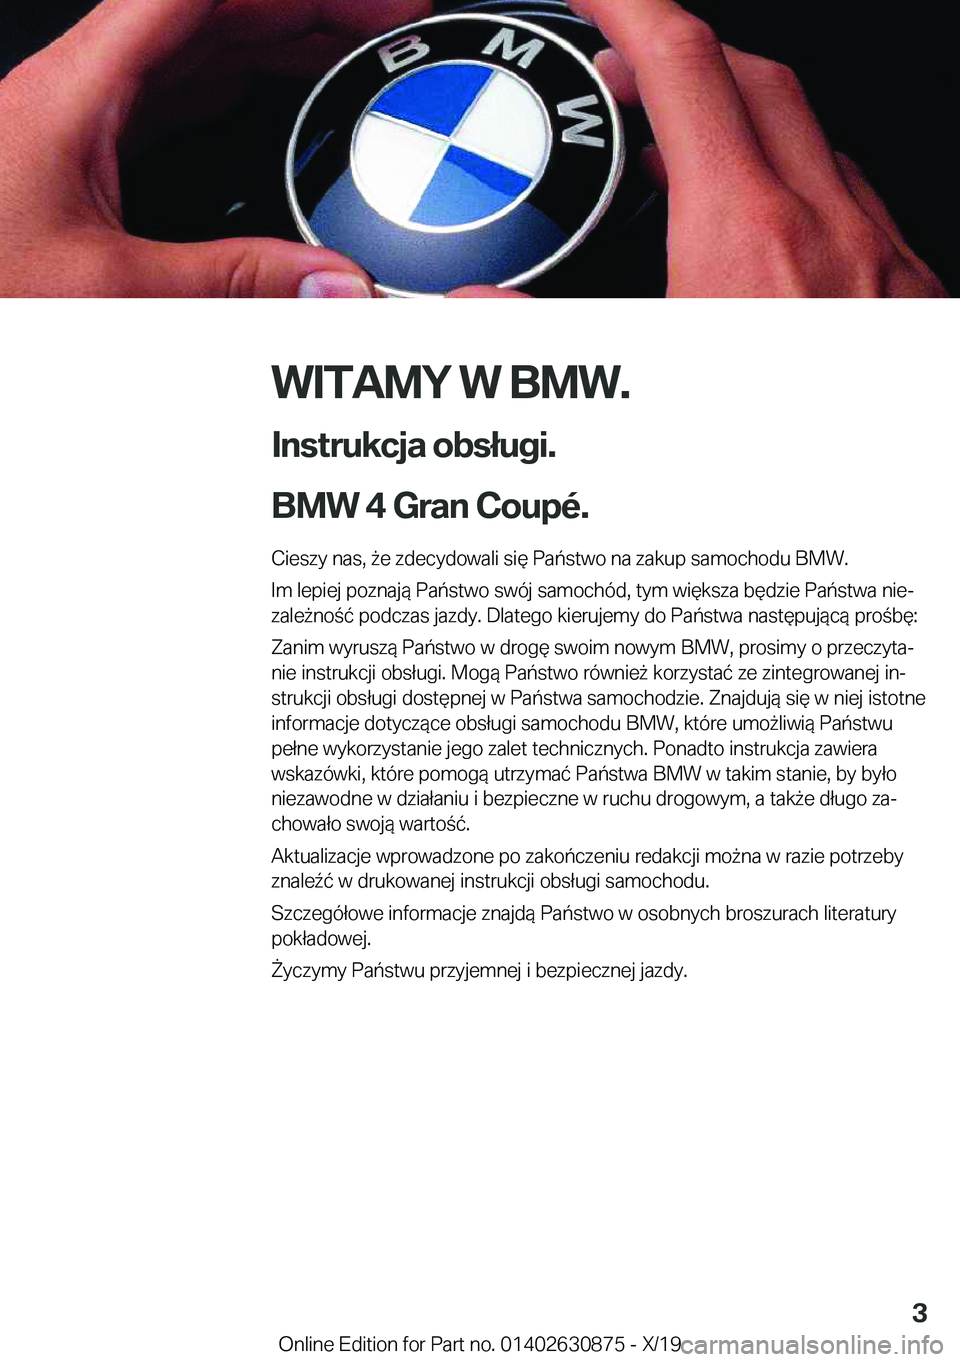 BMW 4 SERIES GRAN COUPE 2020  Instrukcja obsługi (in Polish) �W�I�T�A�M�Y��W��B�M�W�.
�I�n�s�t�r�u�k�c�j�a��o�b�s�ł�u�g�i�.
�B�M�W��4��G�r�a�n��C�o�u�p�